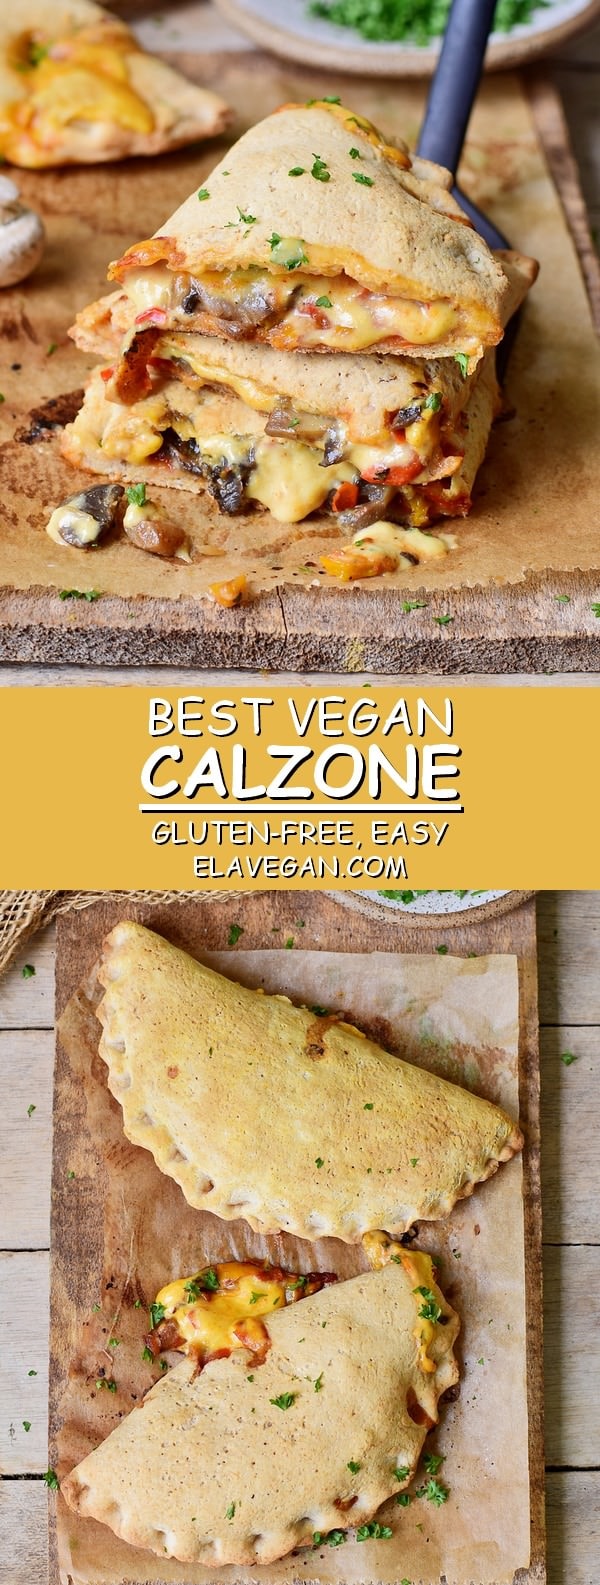 Best vegan Calzone recipe gluten-free easy